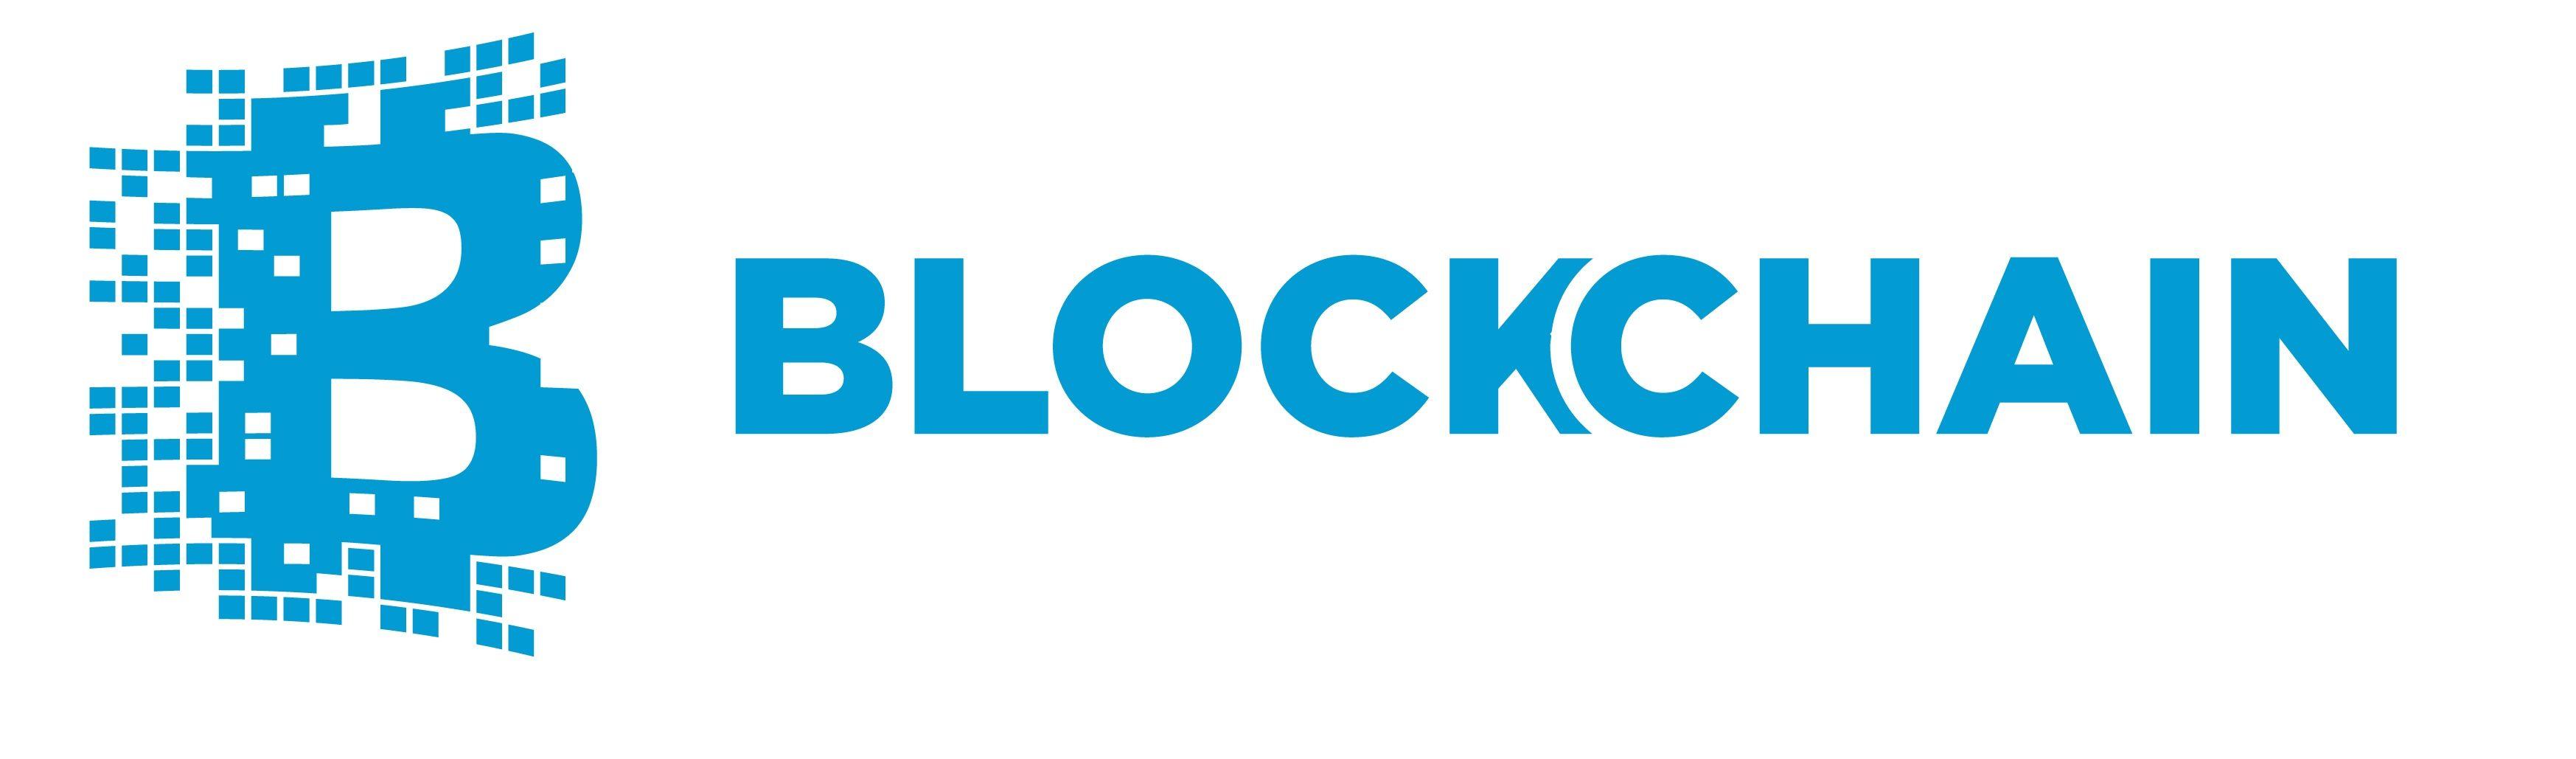 Blockchain App Logo - Blockchain Logo PR Buzz